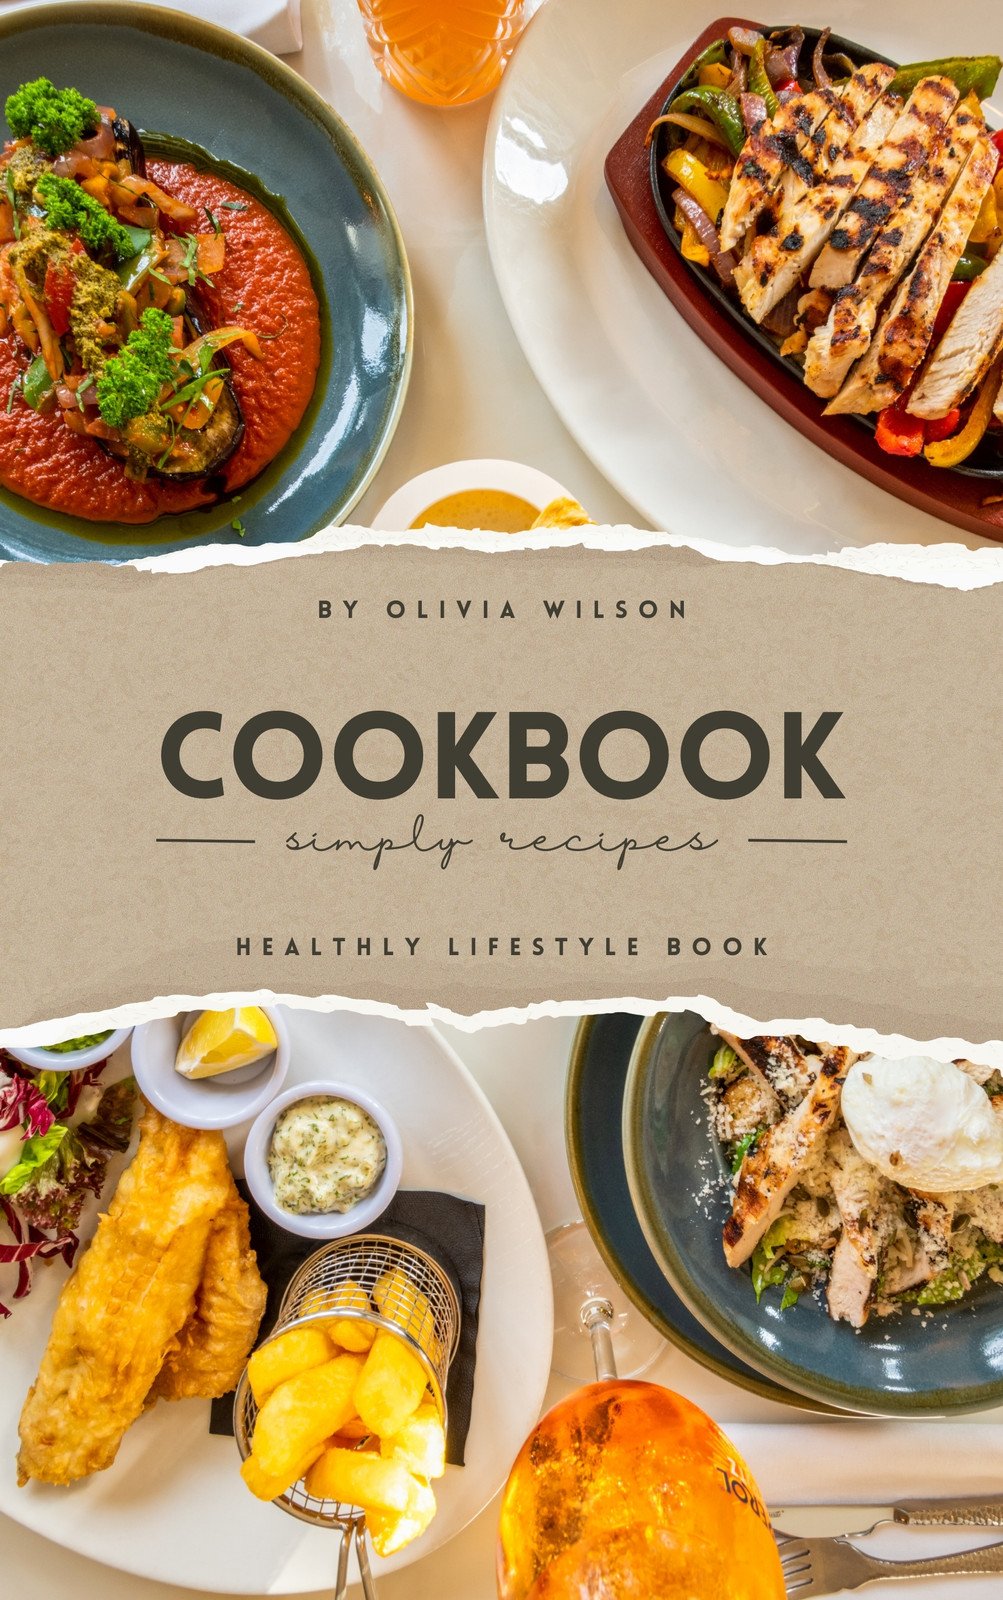 https://marketplace.canva.com/EAFpS1ceGQQ/1/0/1003w/canva-colorful-modern-cookbook-book-cover-YTEX1G_wu18.jpg